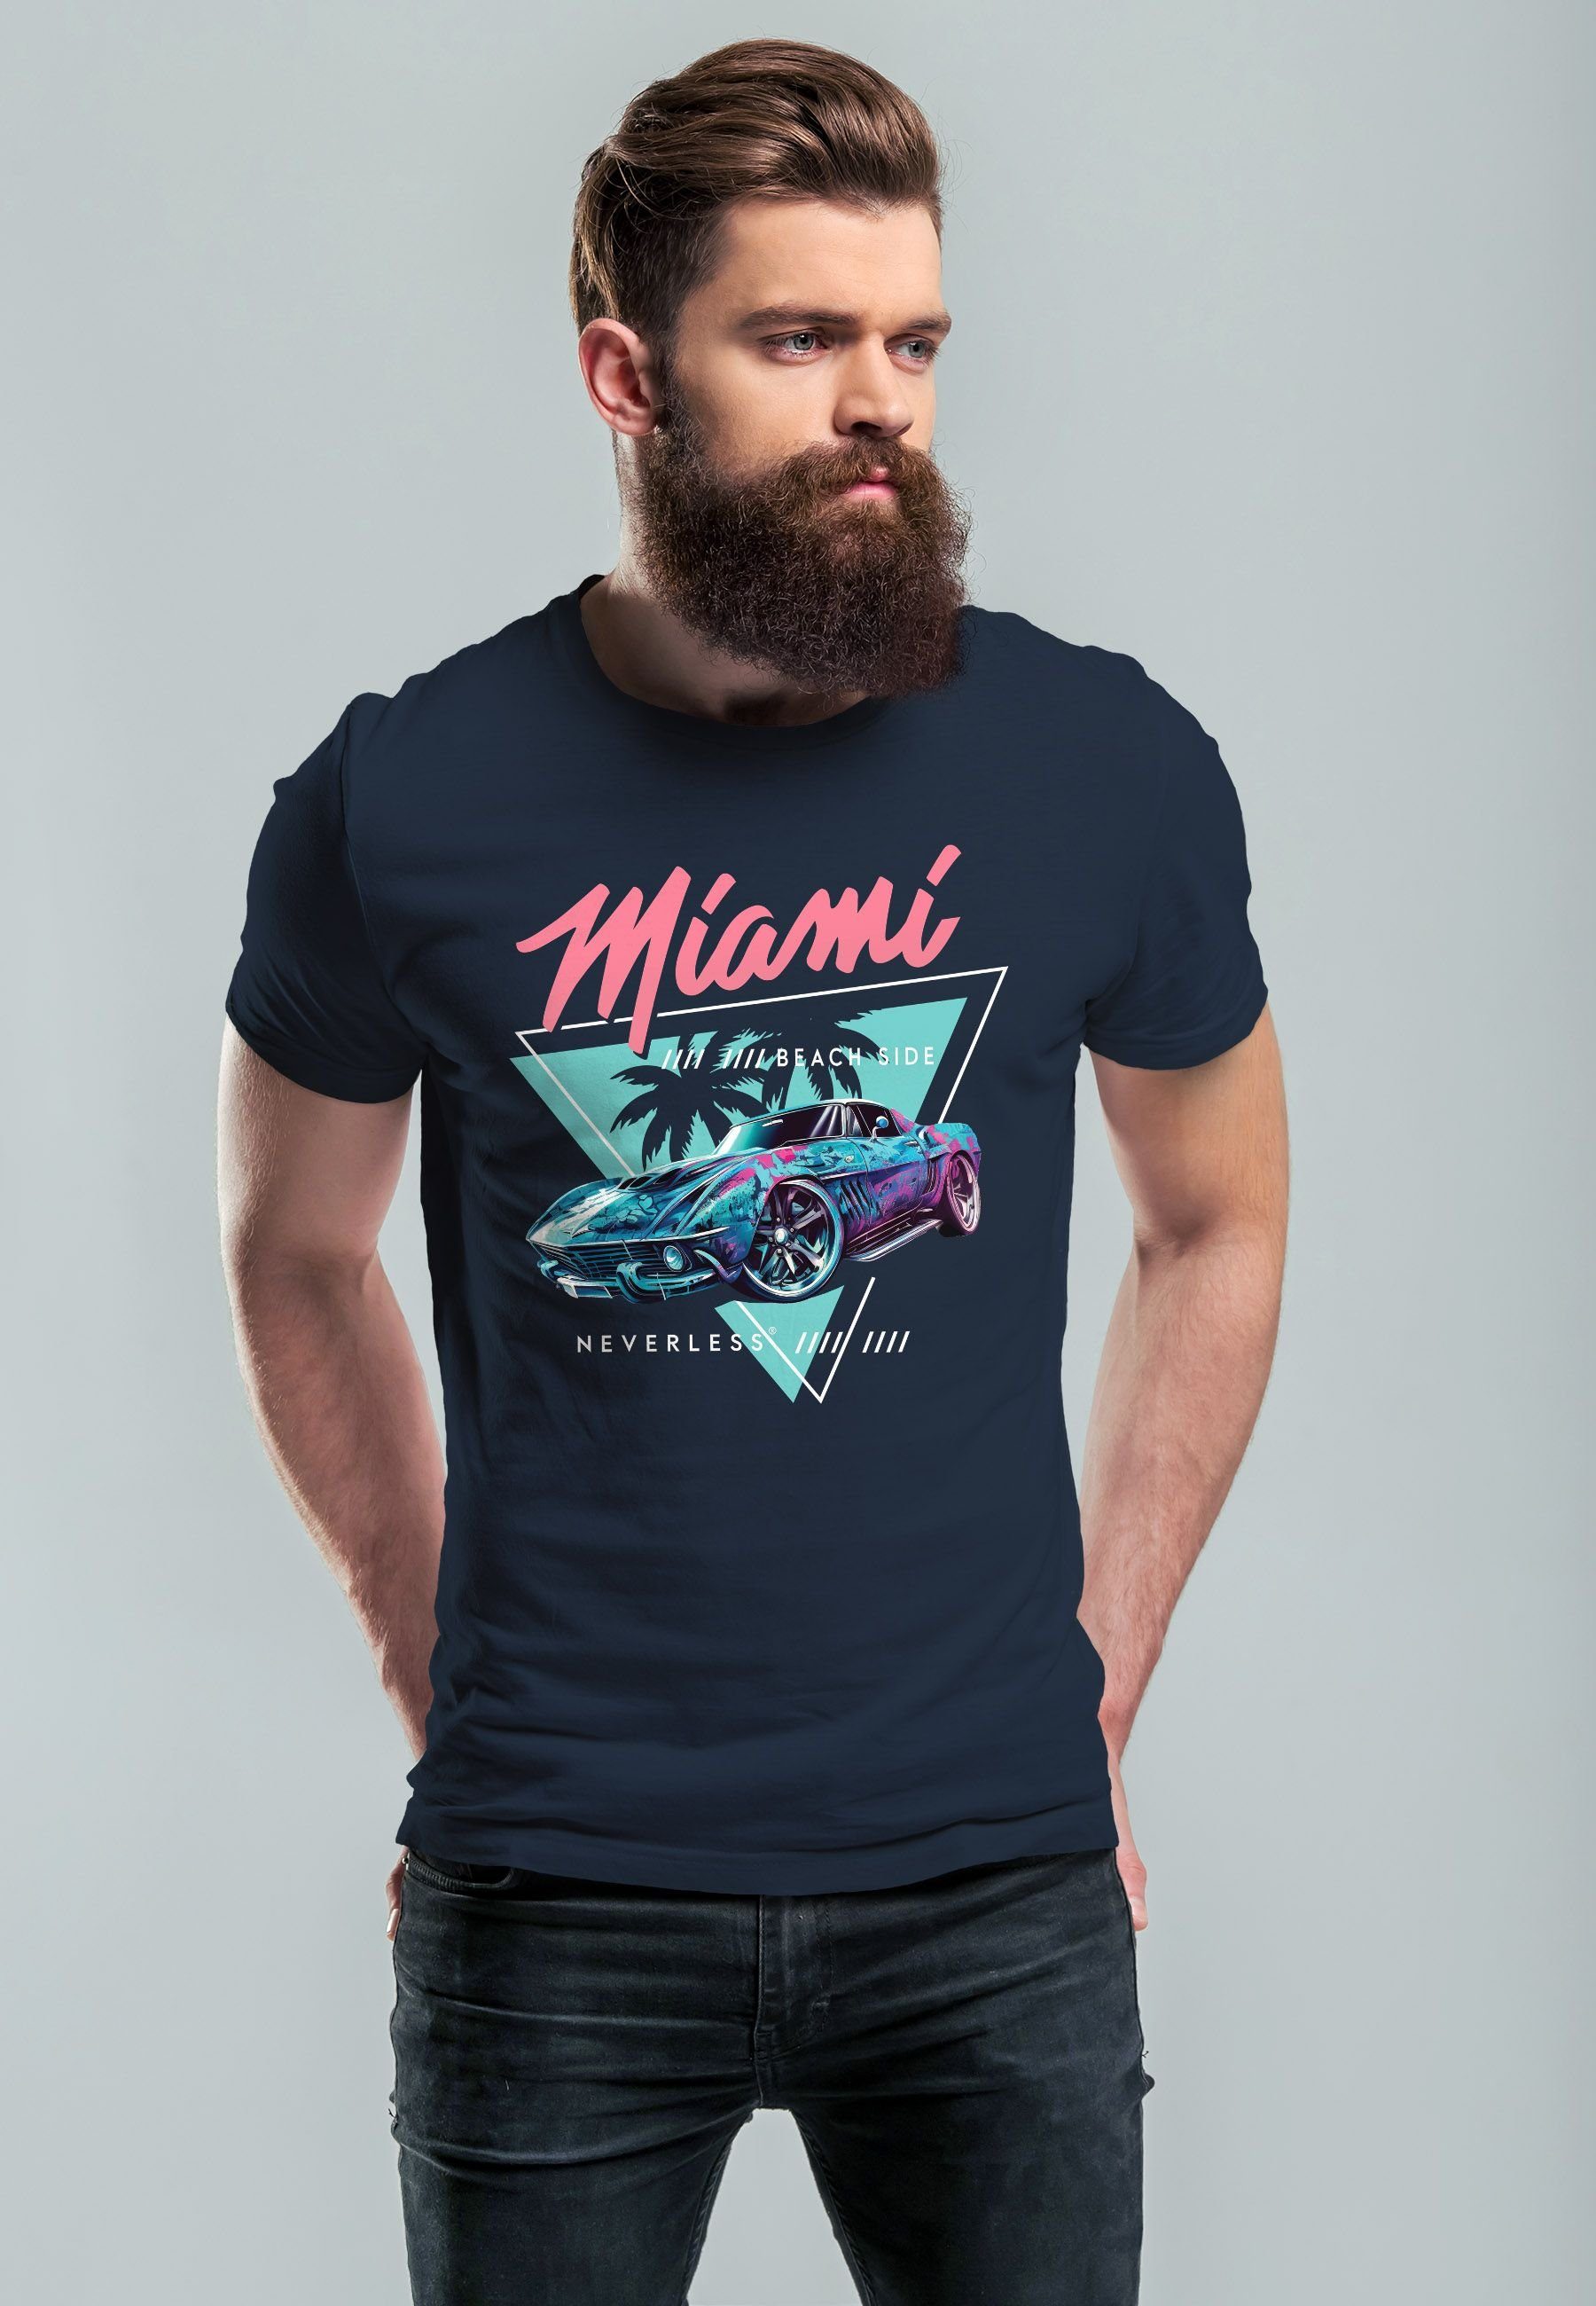 Print-Shirt Motiv Surfing Retro Beach Automobil Miami USA Bedruckt Herren mit Print navy Neverless T-Shirt